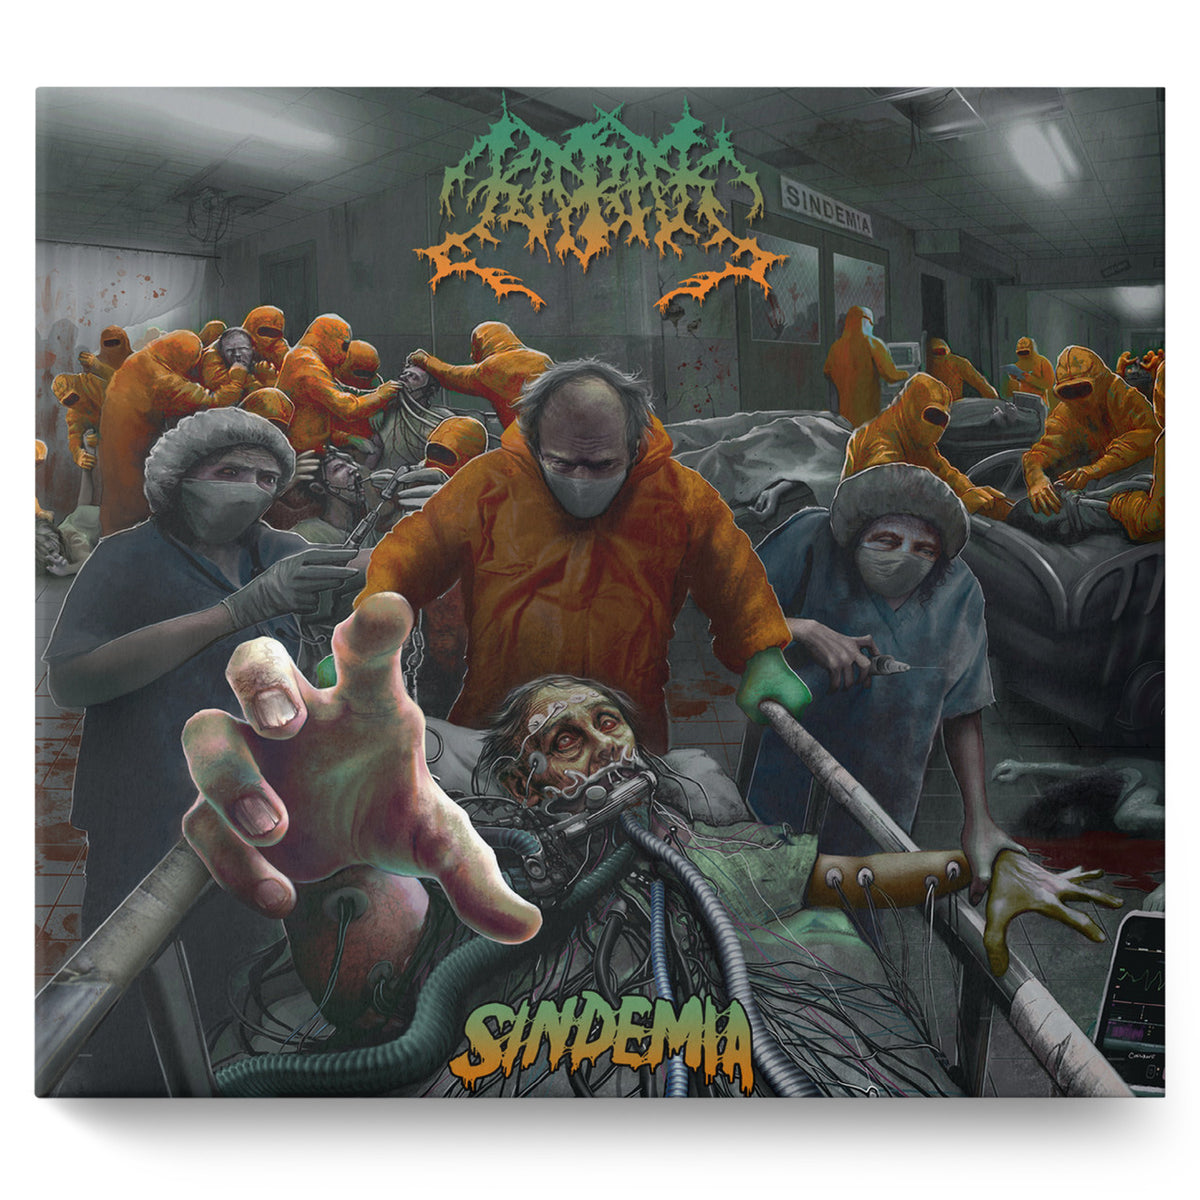 Kabak "Sindemia" Digipak CD - Miasma Records